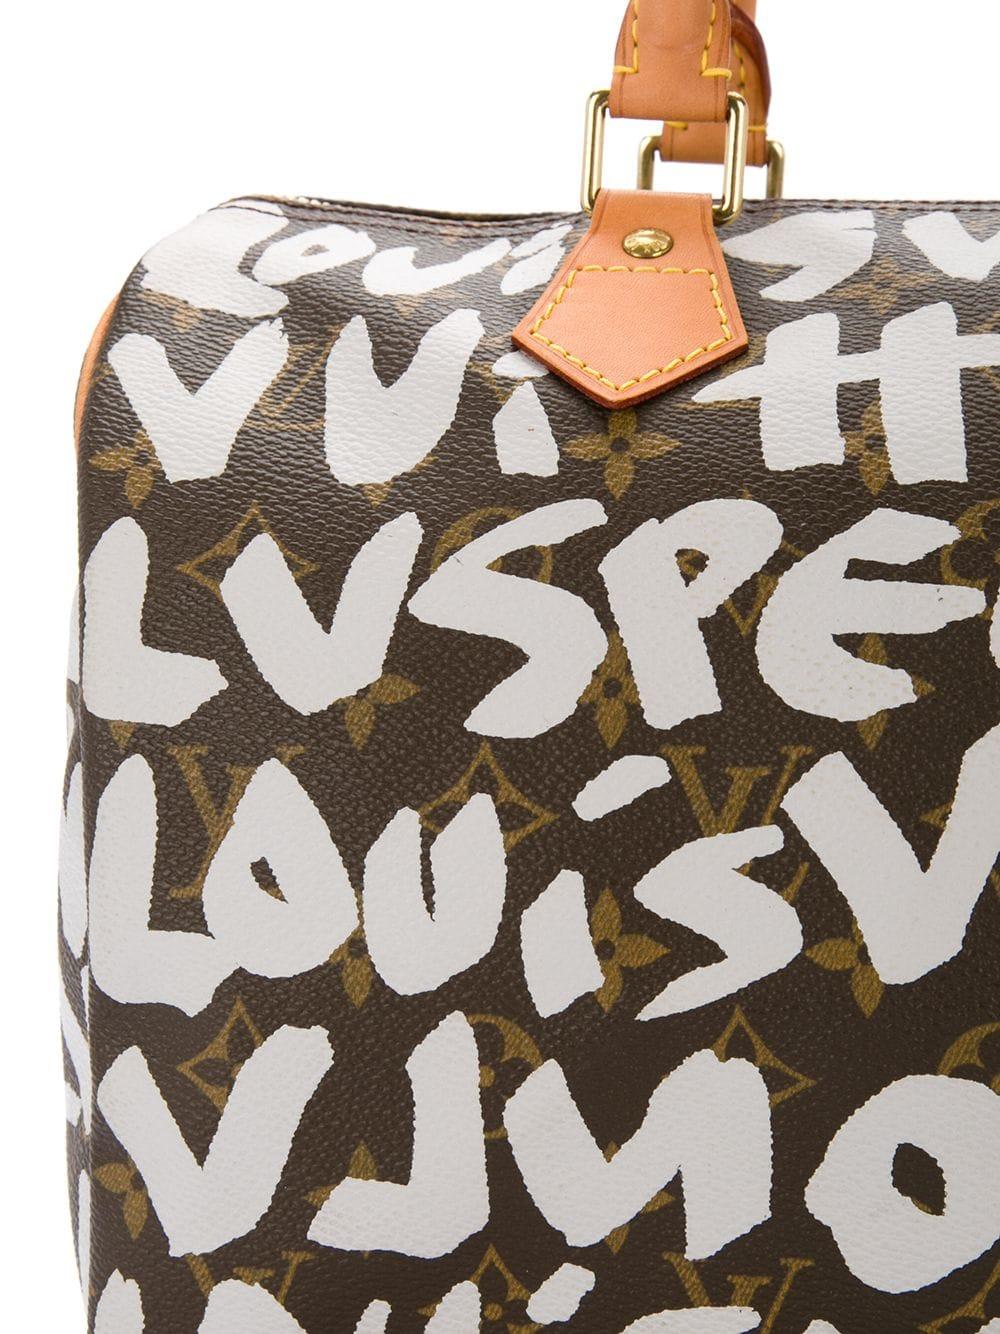 Louis Vuitton 2009 Pre-owned Speedy 30 Graffiti Handbag